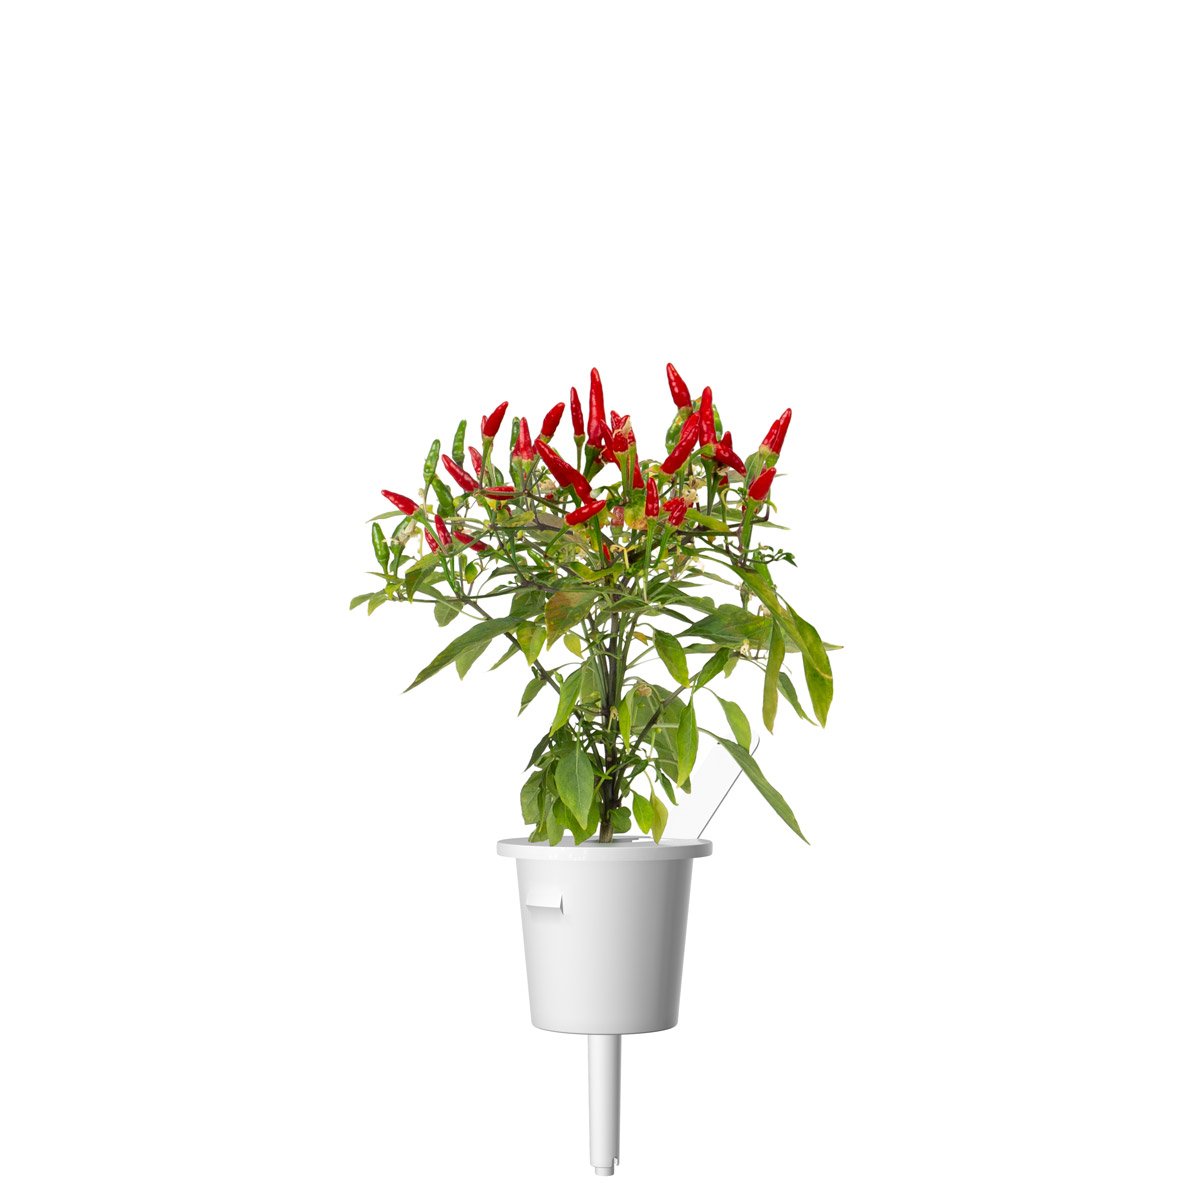 piri-piri-piripiri-chili-paprika-smart-garden-click-grow-utántöltő-növénykapszula